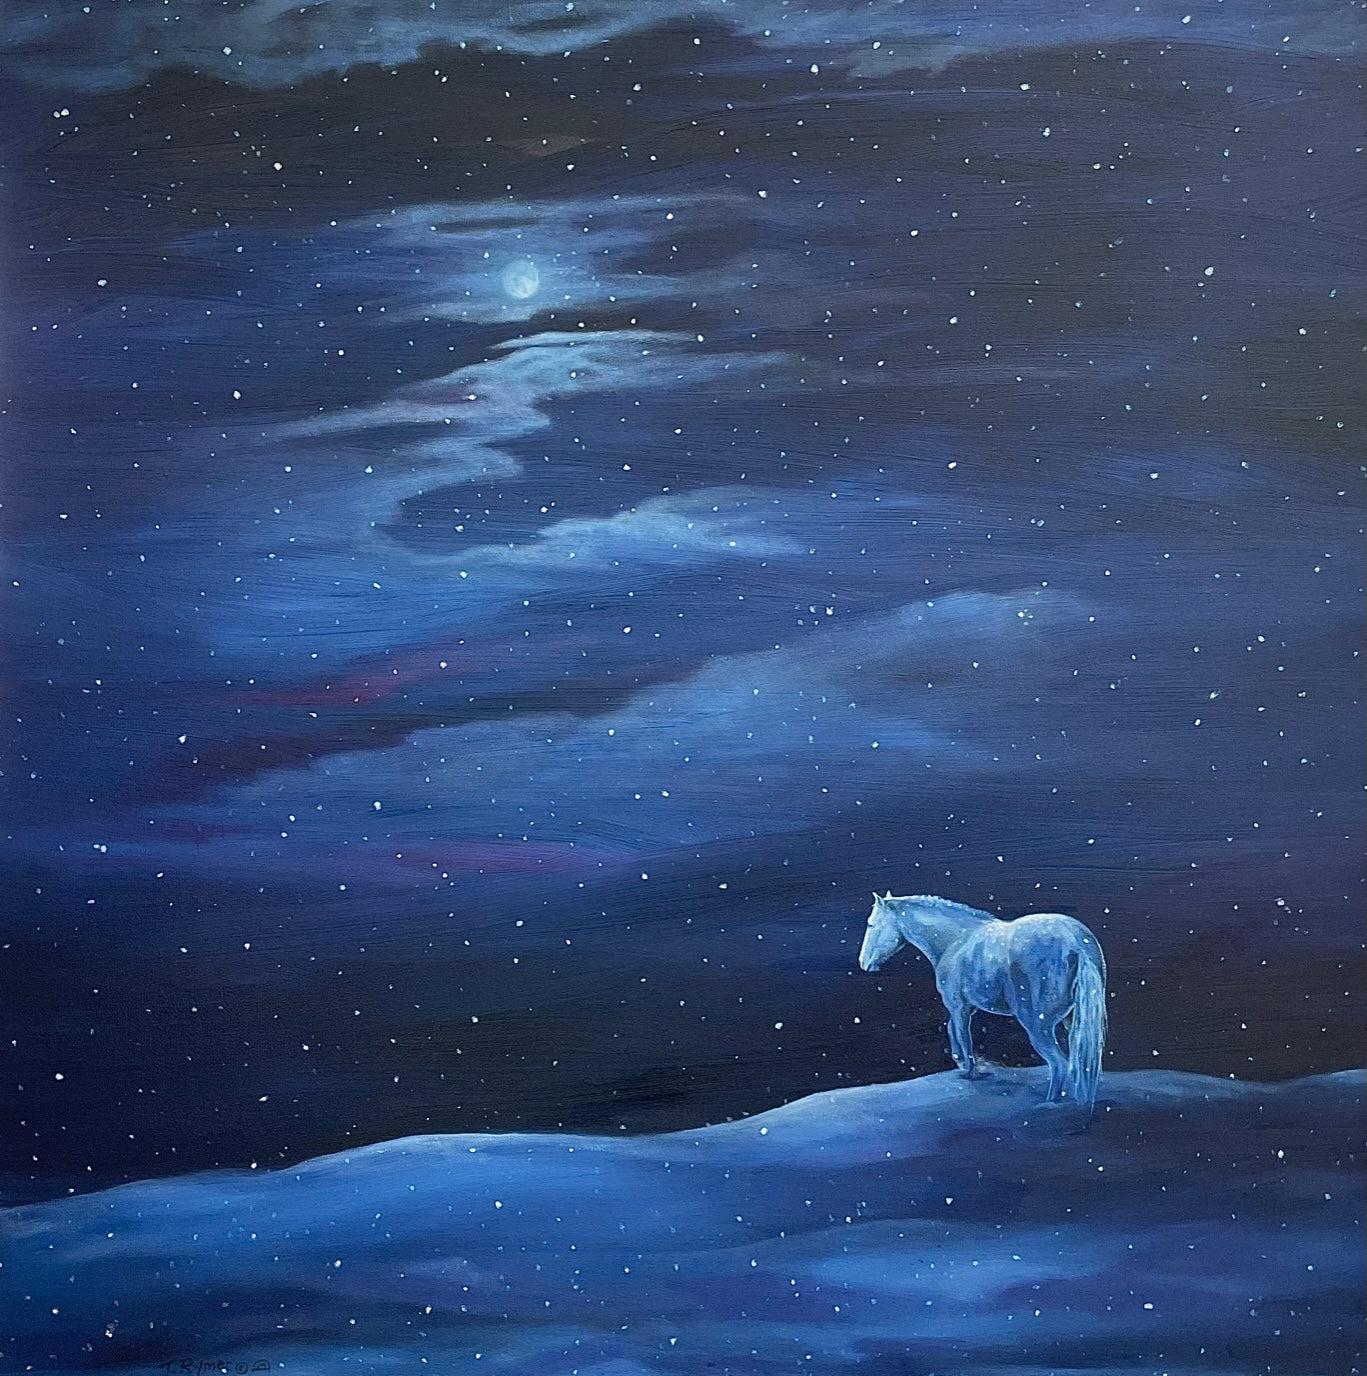 He Took a Midnight Stroll-Painting-Tamara Rymer-Sorrel Sky Gallery